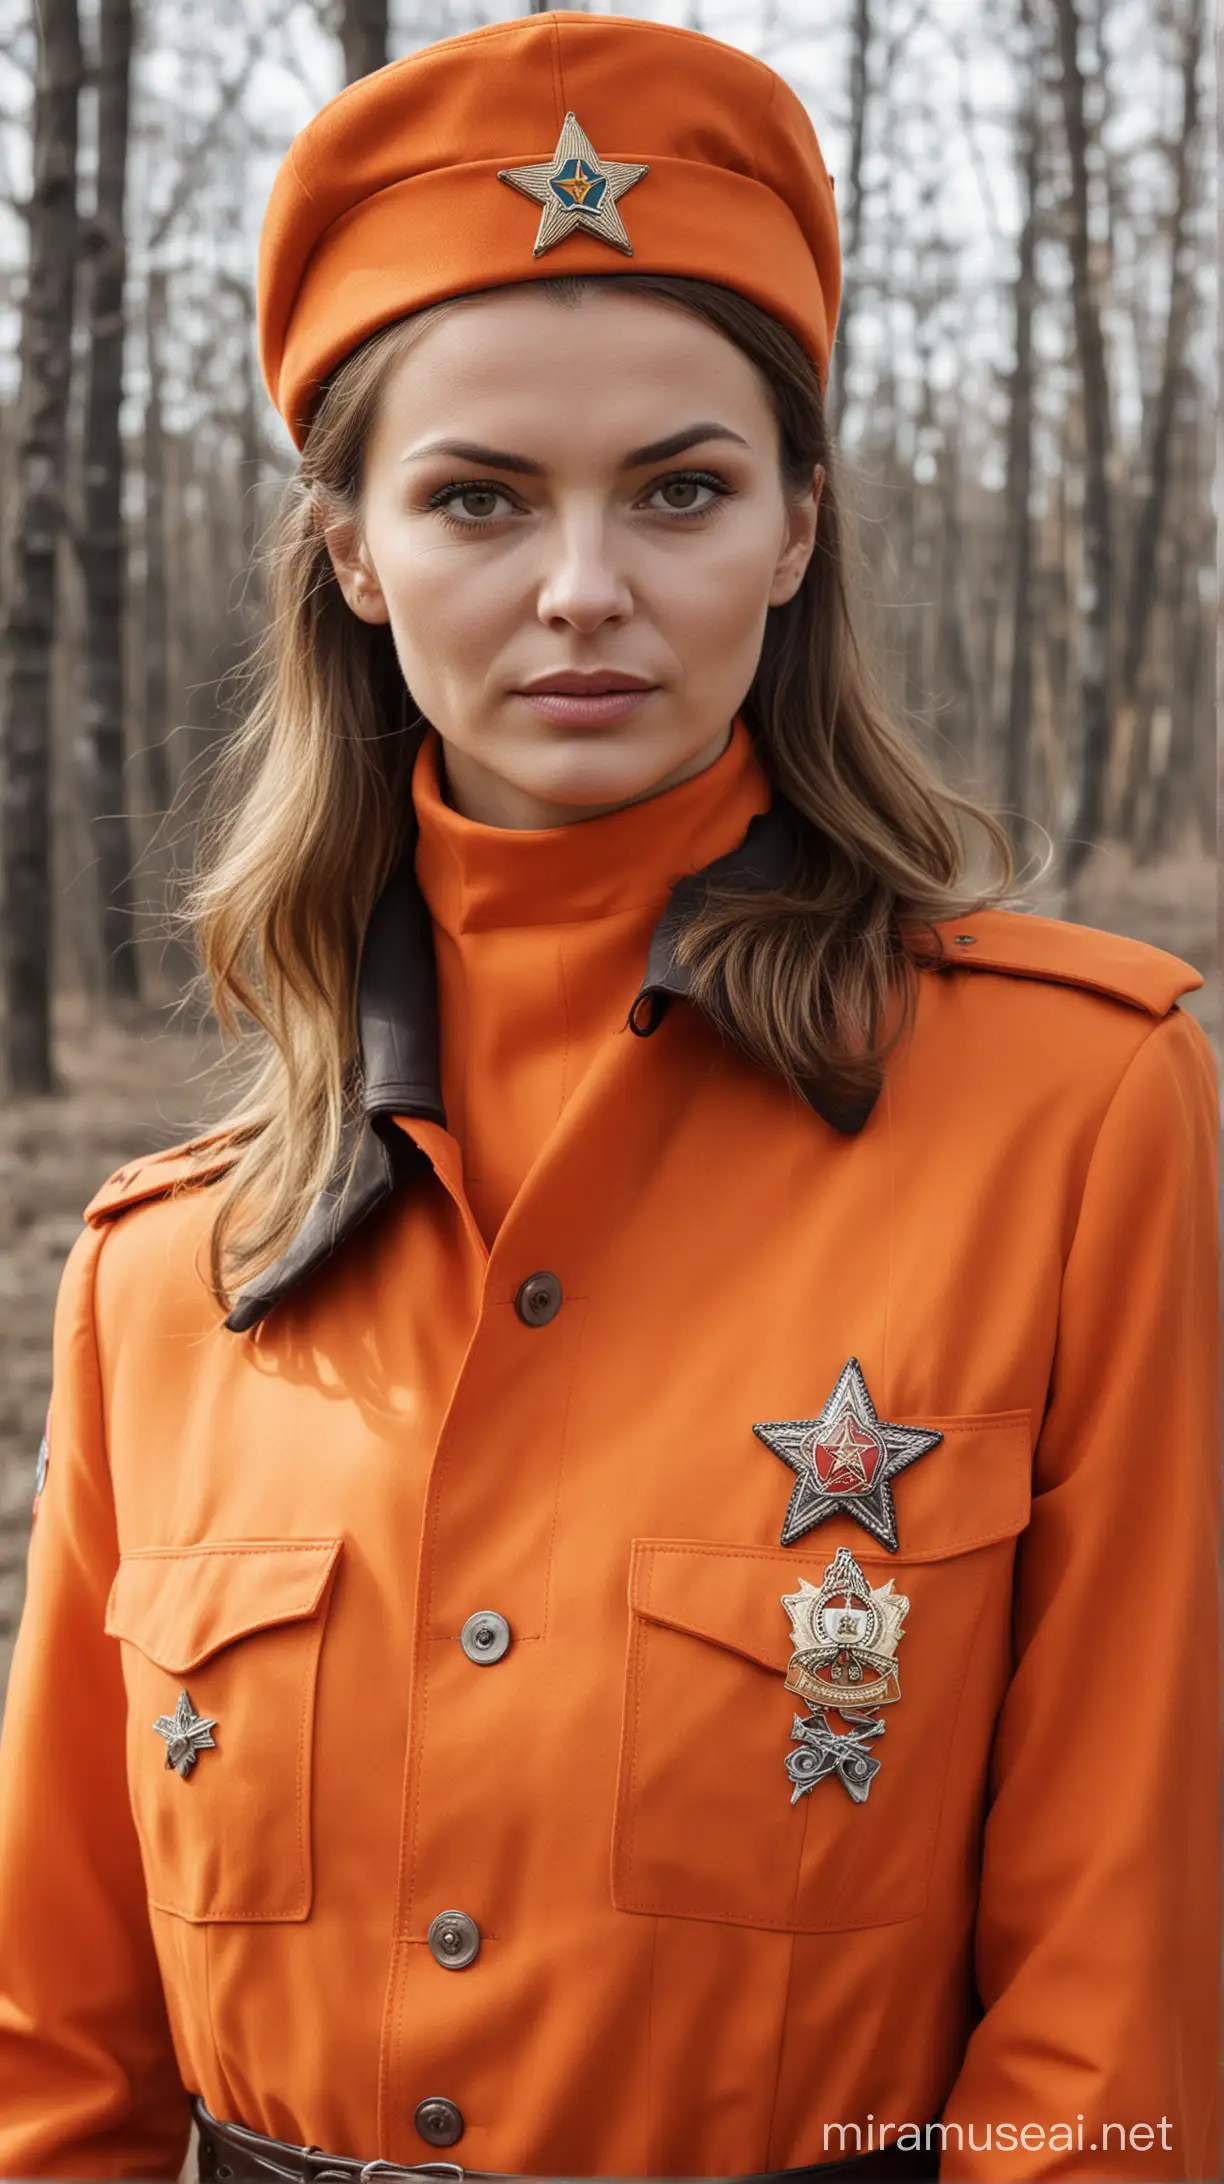 A female KGB agent in an orange uniform